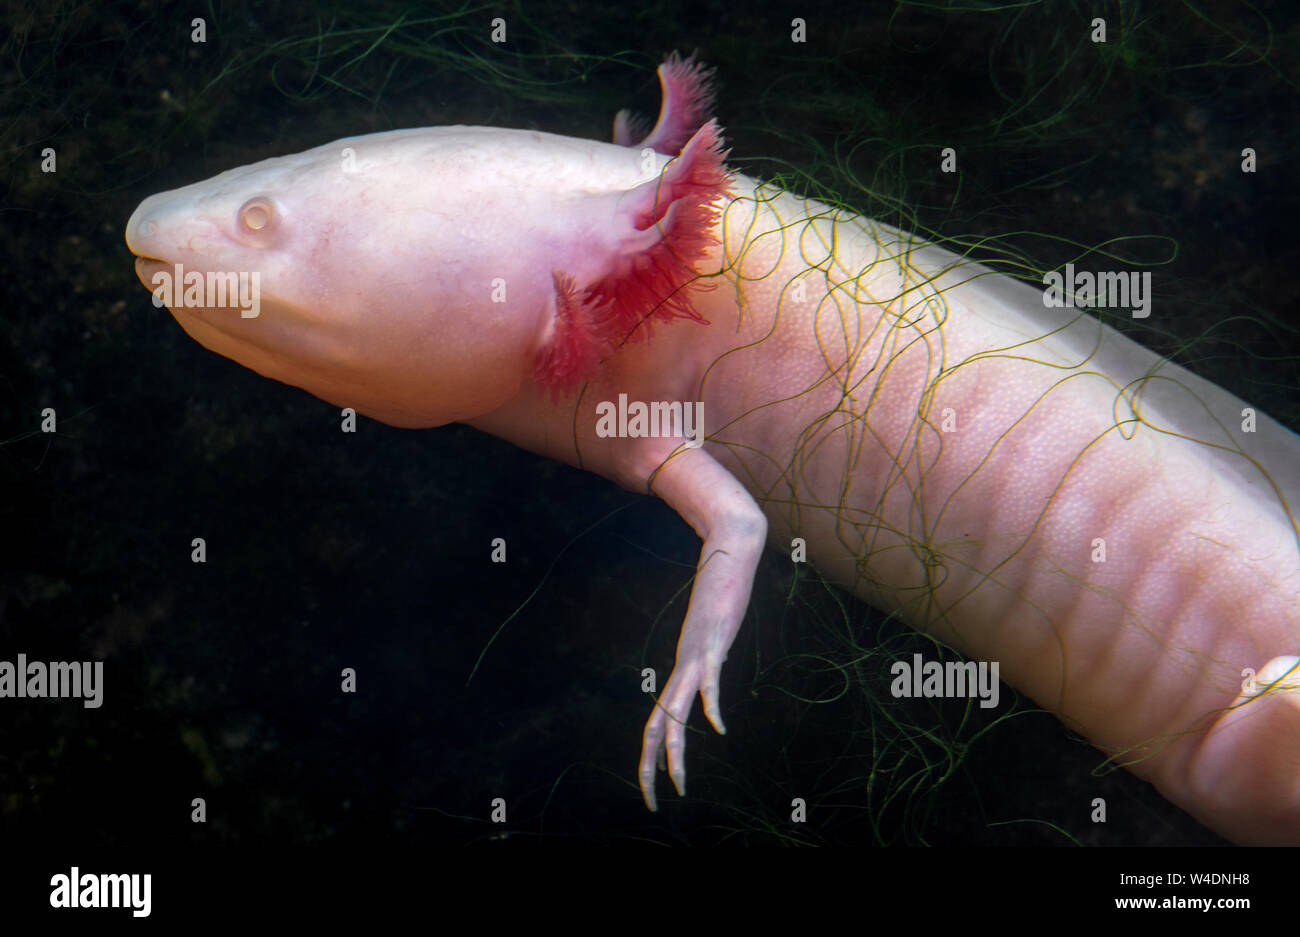 Axolotl / Mexican walking fish (Ambystoma mexicanum / Gyrinus mexicanus), neotenic salamander native to Mexico, showing external gills Stock Photo